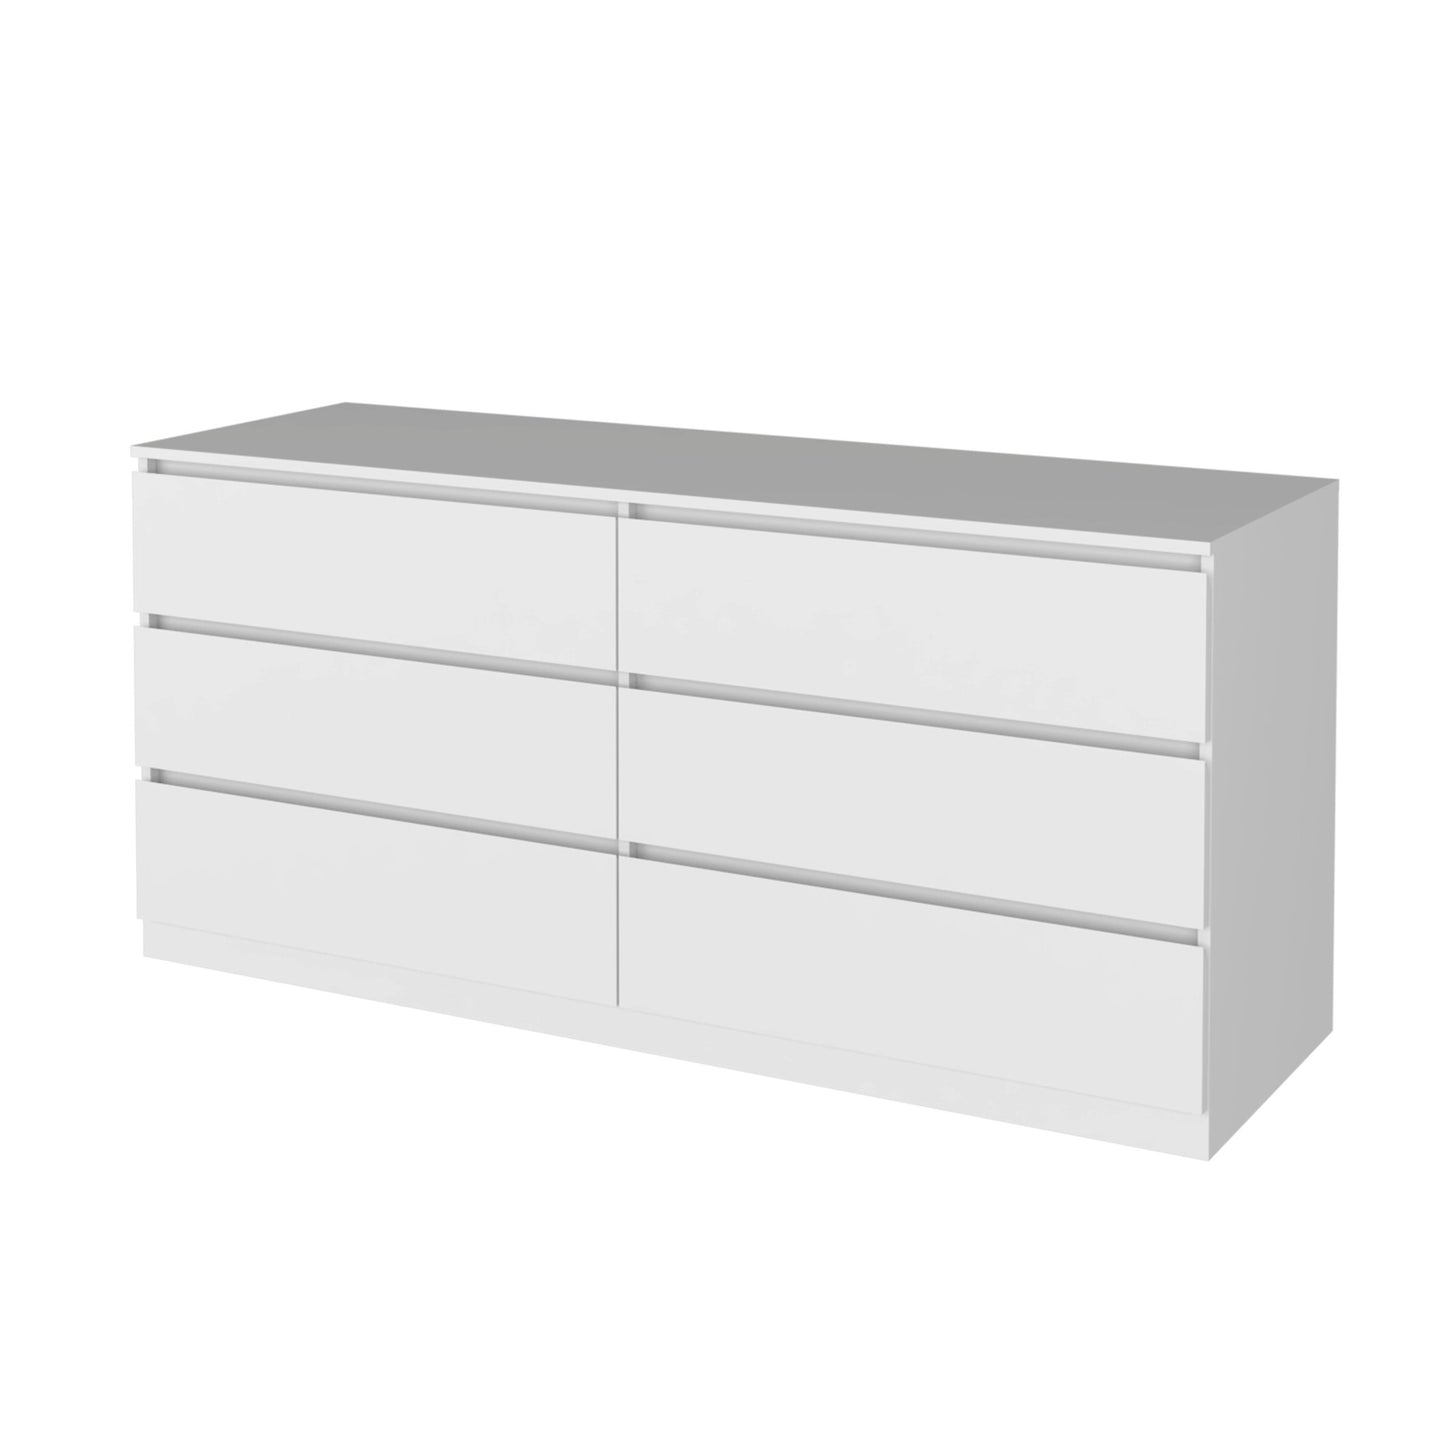 32" White Six Drawer Standard Dresser